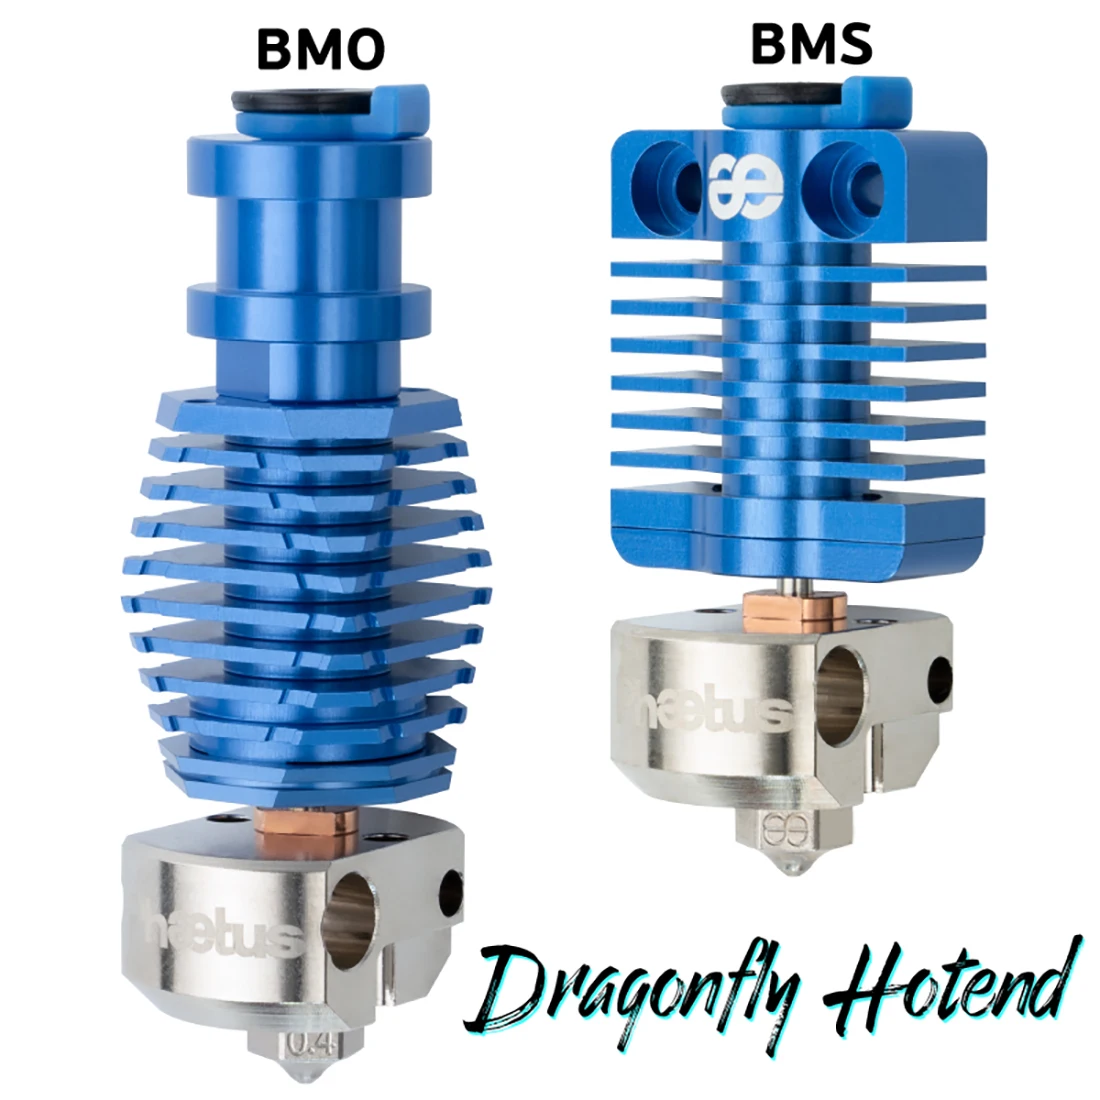 

BMO BMS Dragonfly Hotend Bimetal Heatbreak Throat For Titan Bowden Extruder V6 Hotend Prusa Aquila ENDER 3